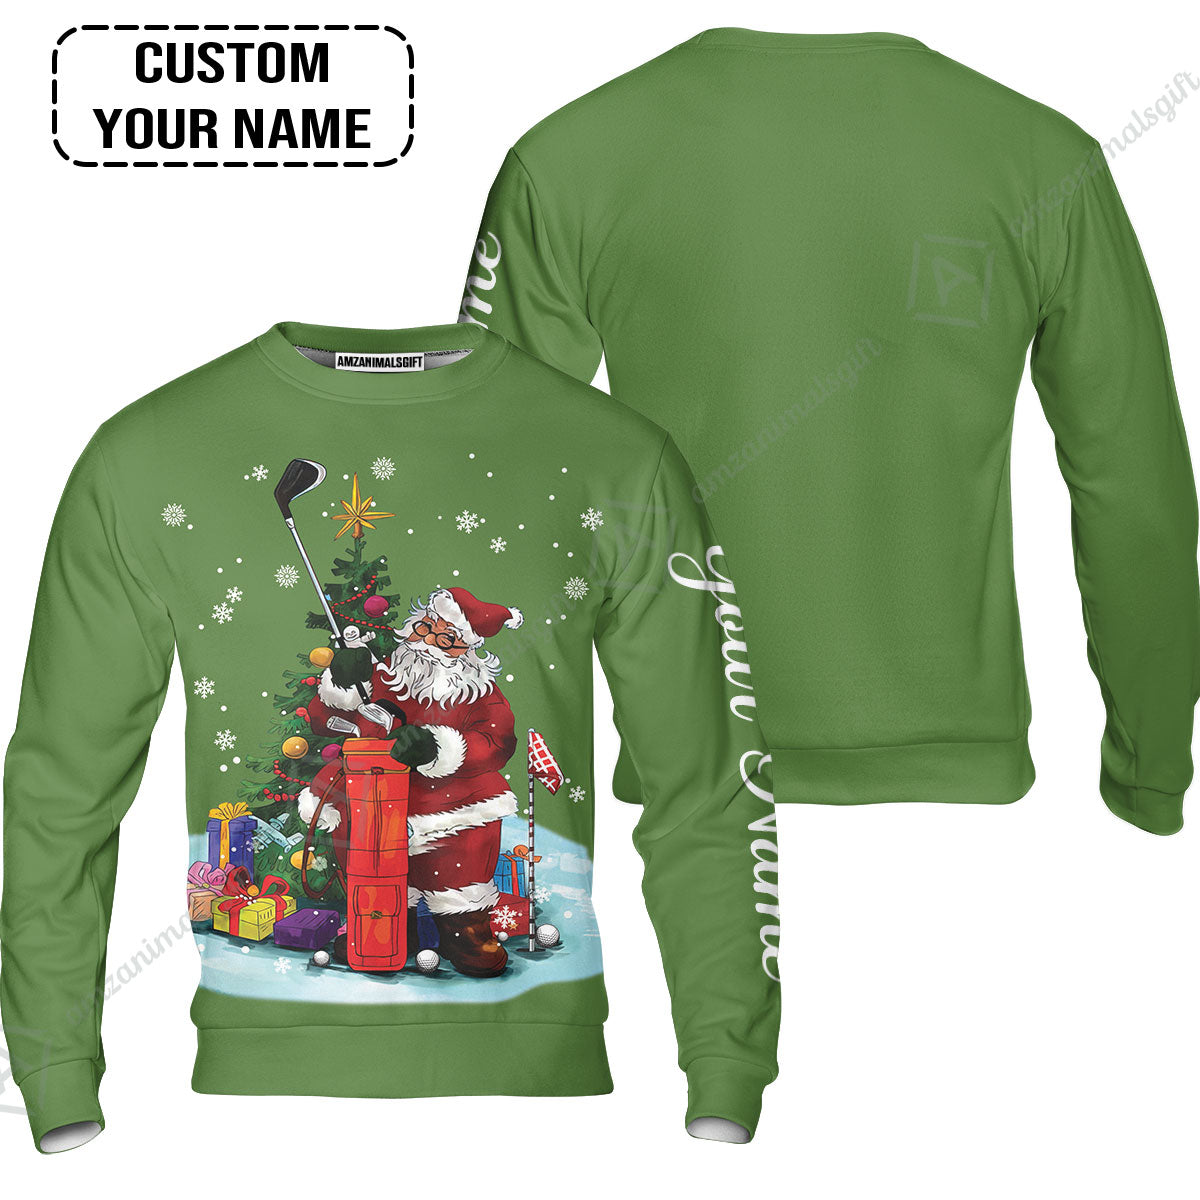 Golf Sweatshirt - Christmas Custom Name, Santa Golfer Apparel - Personalized Gift For Golf Lover